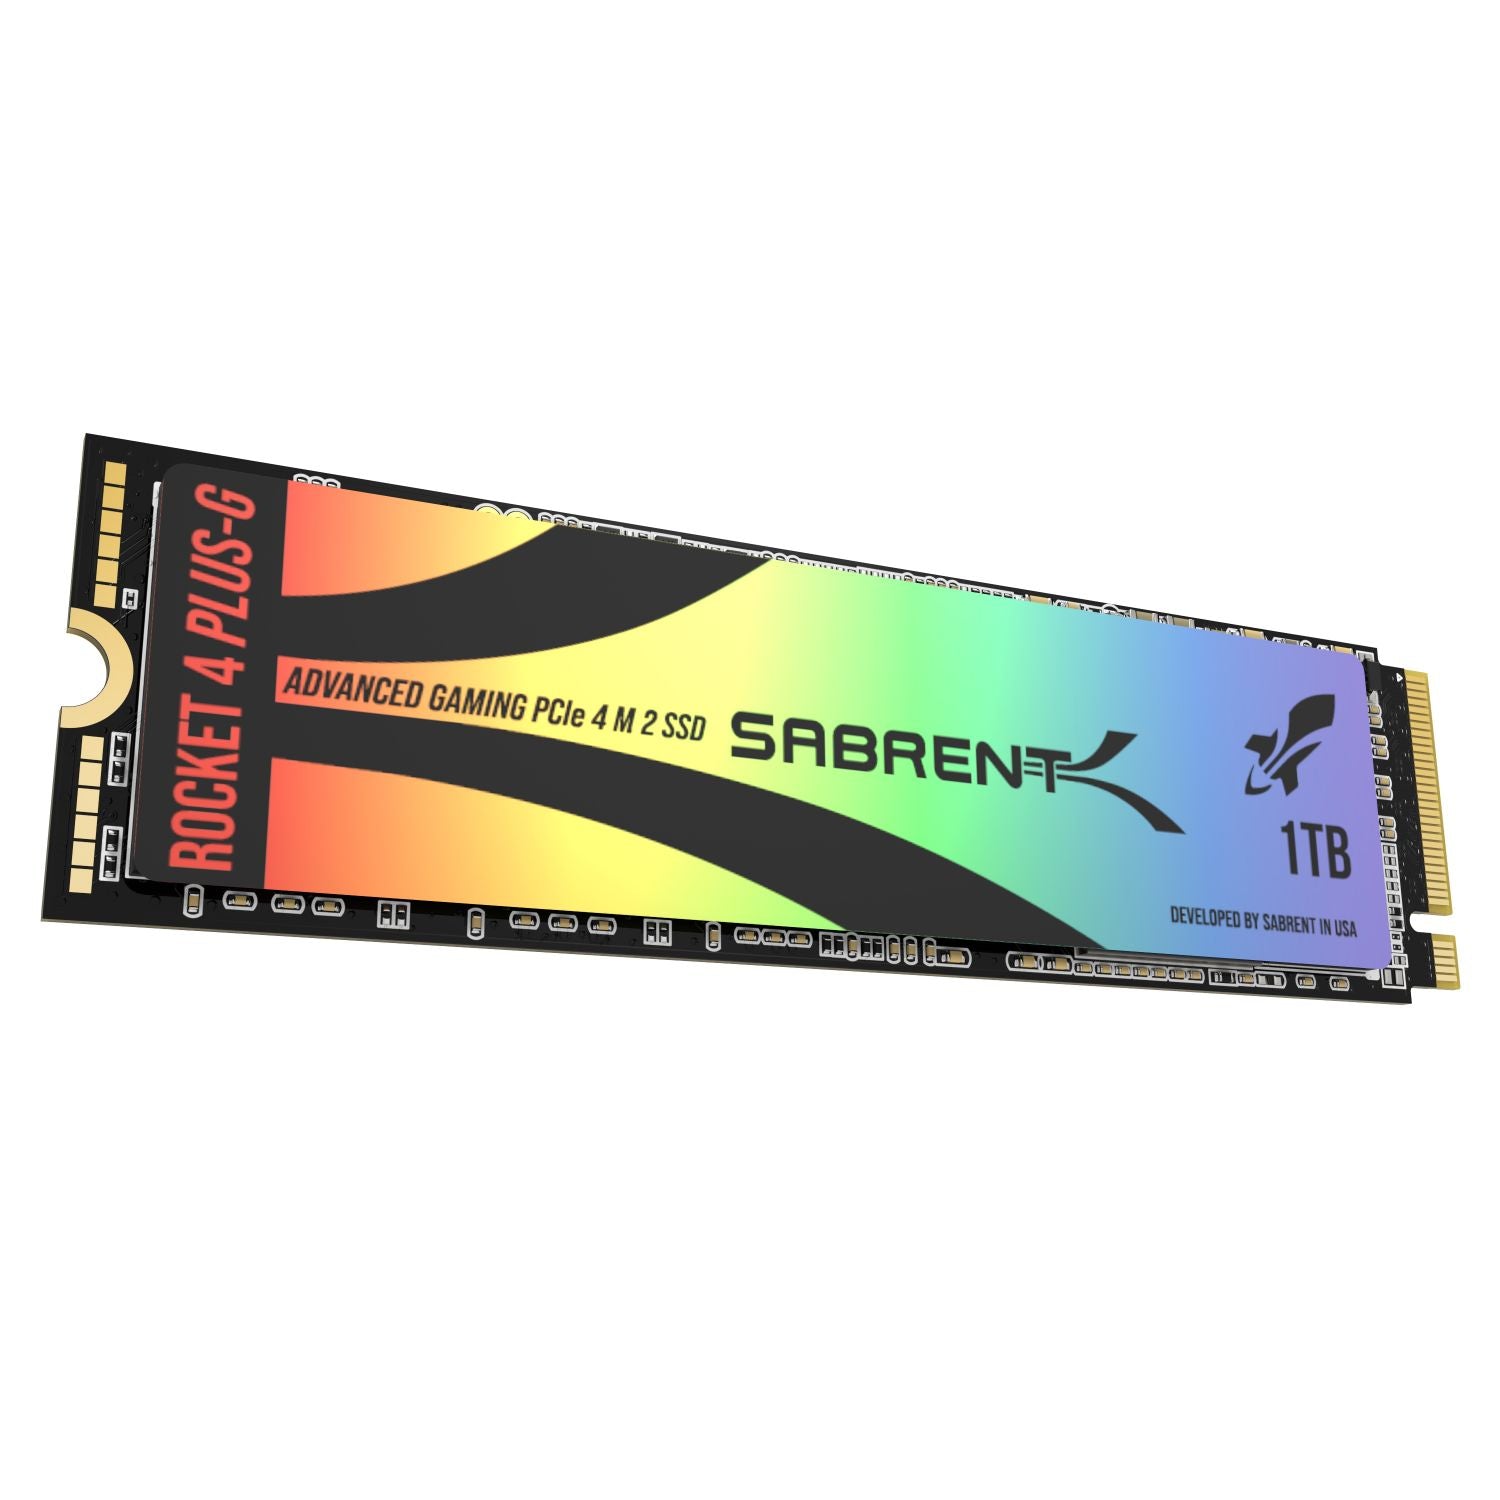 Rocket 4 Plus-G SSD 1TB - Sabrent